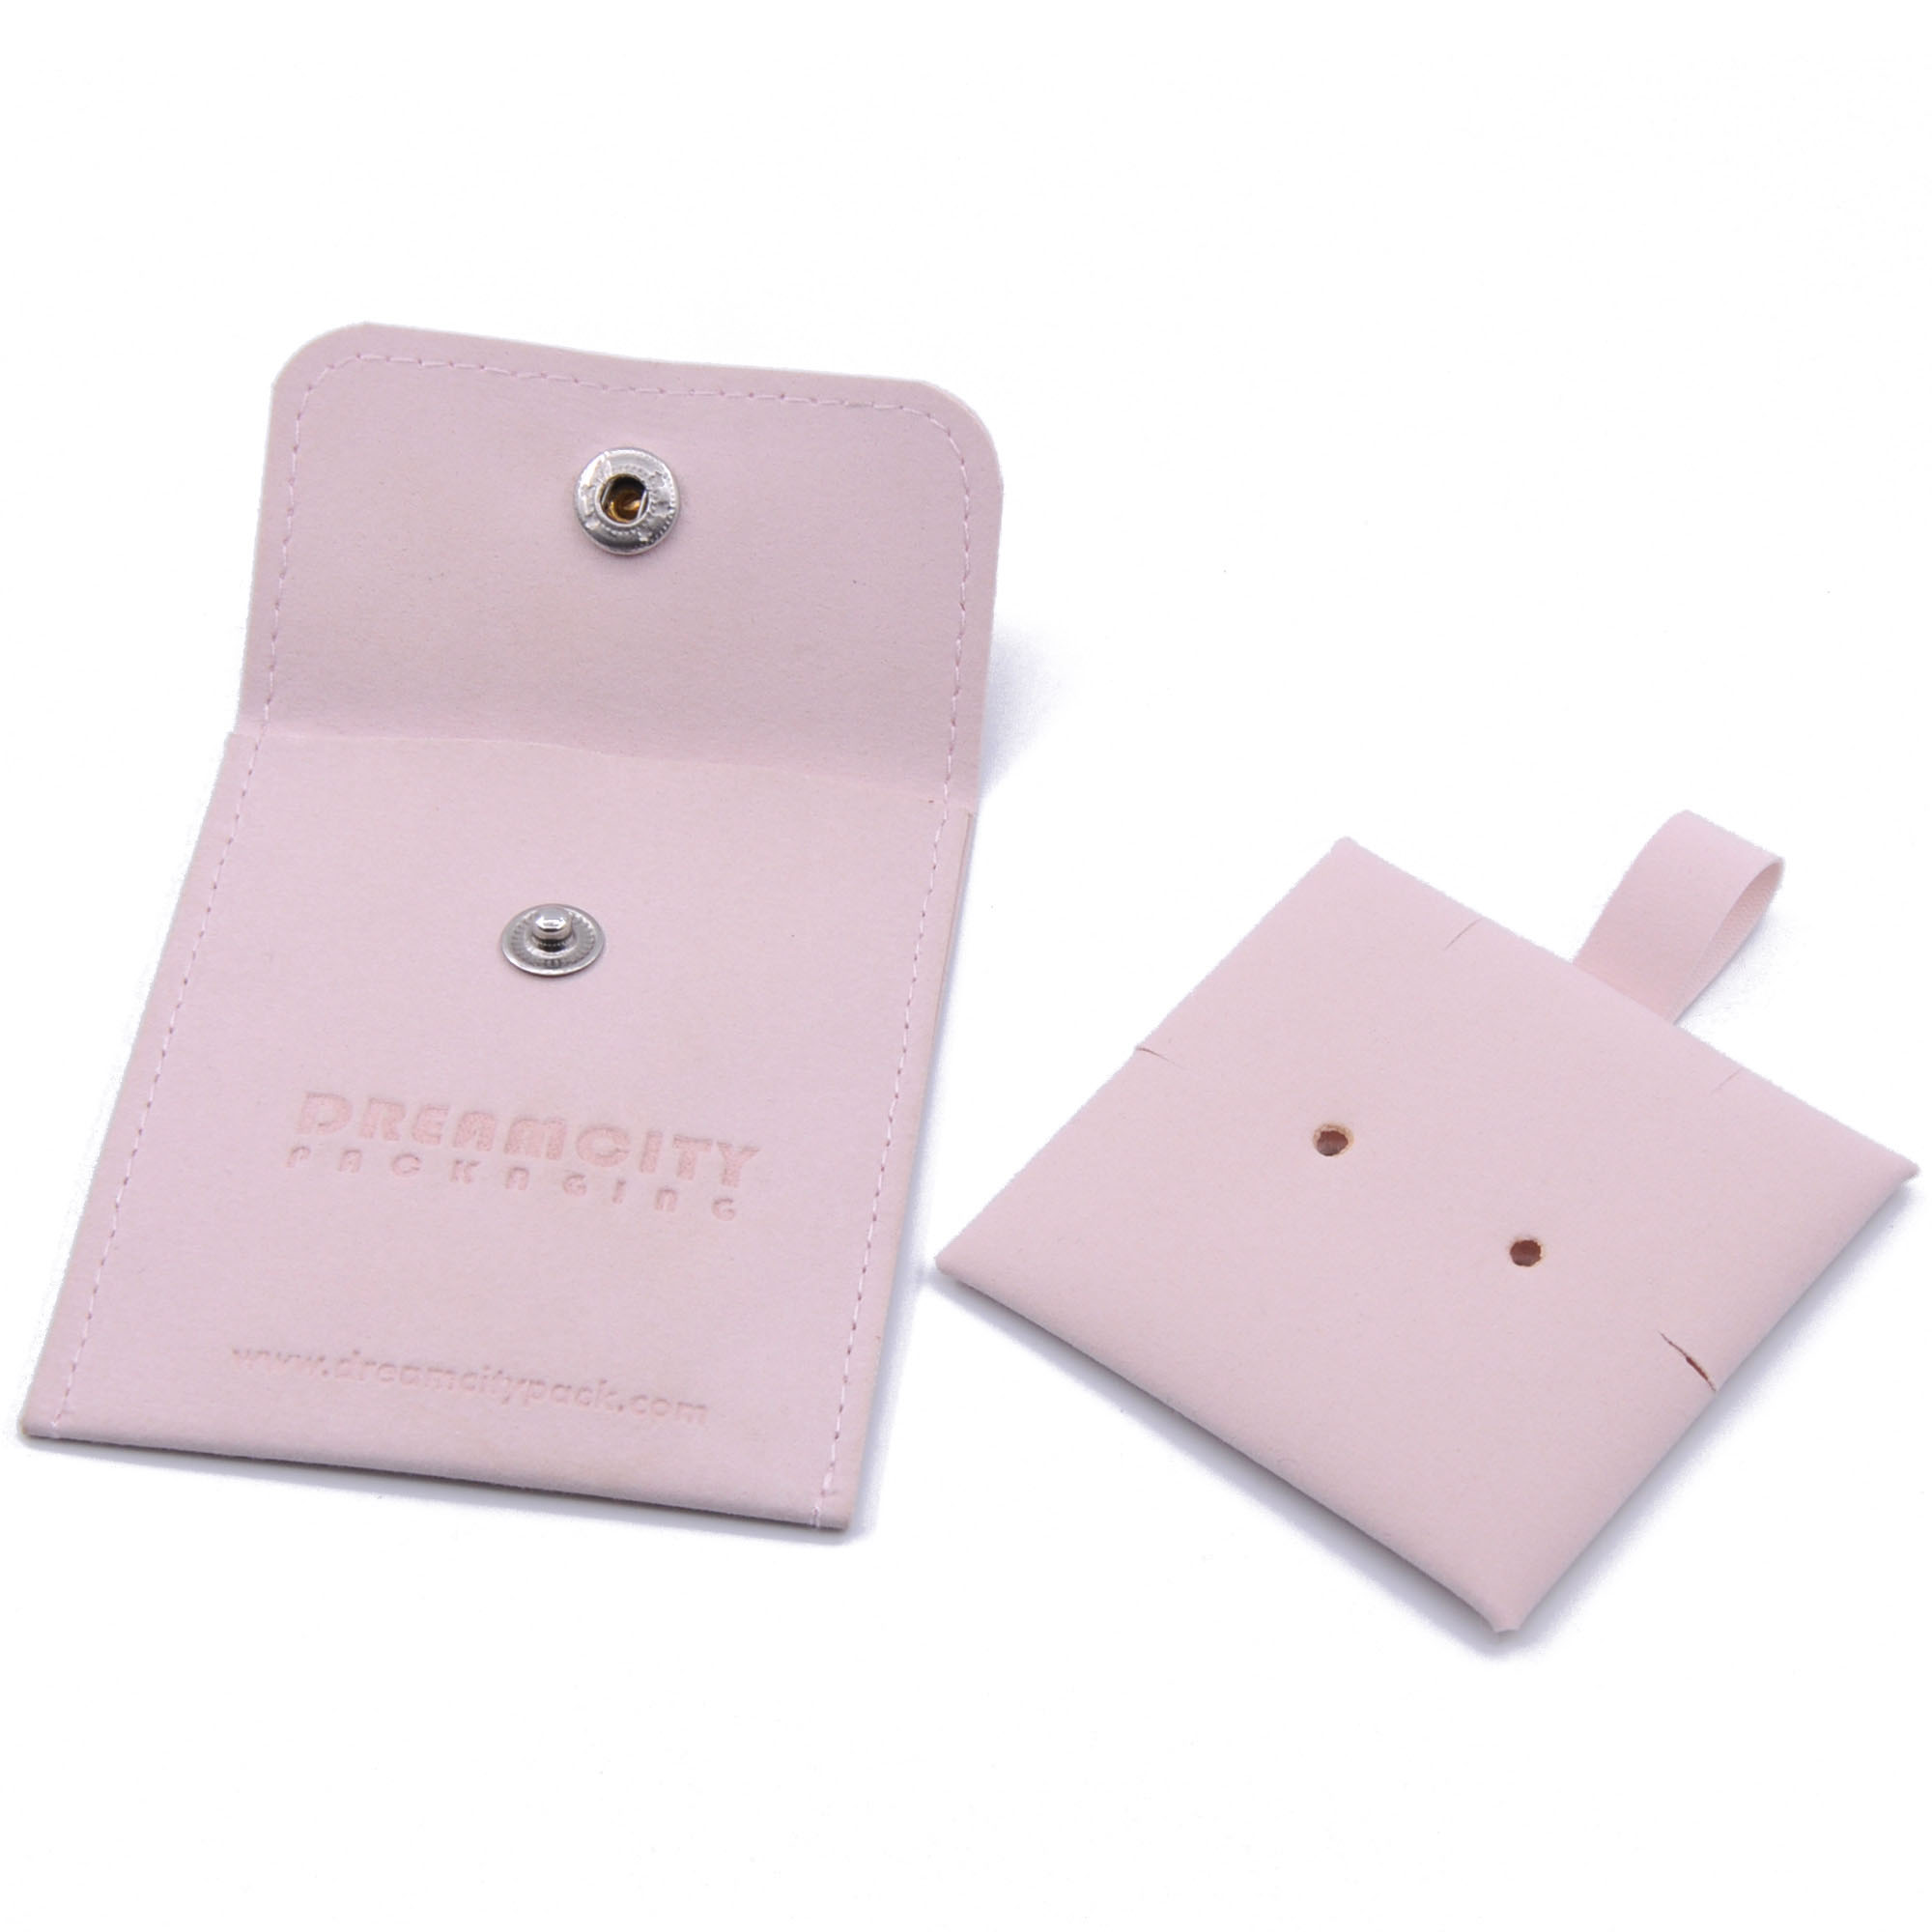 50pcs Custom Cotton Bag Jewelry Pouch Personalized LOGO Craft